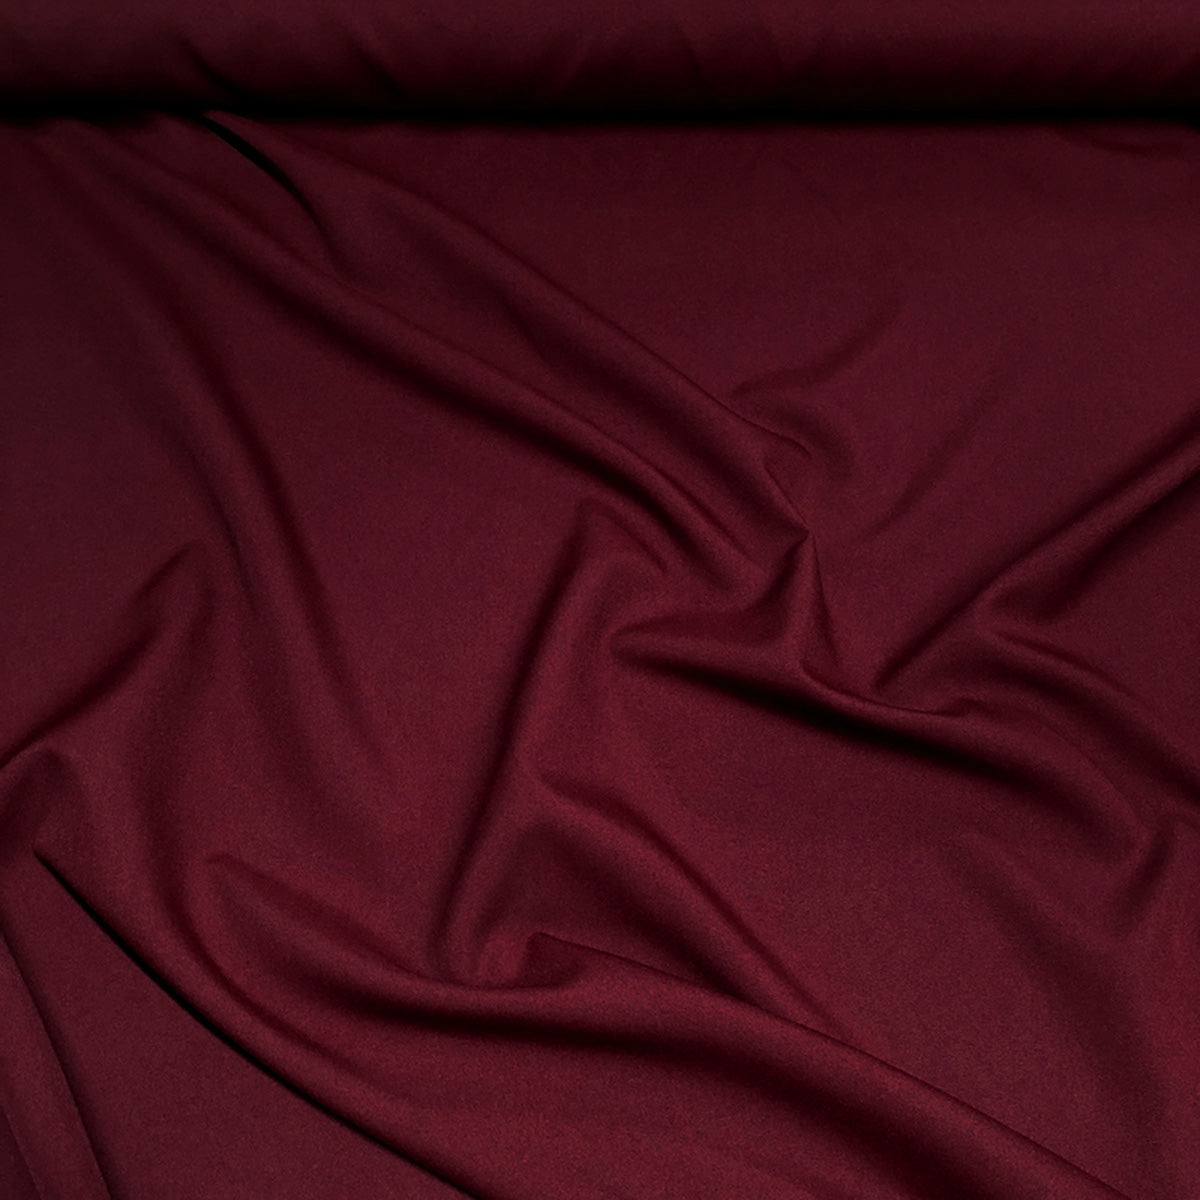 Premium Poly (Poplin) Wholesale Fabric in Burgundy 1232 – Urquid Linen